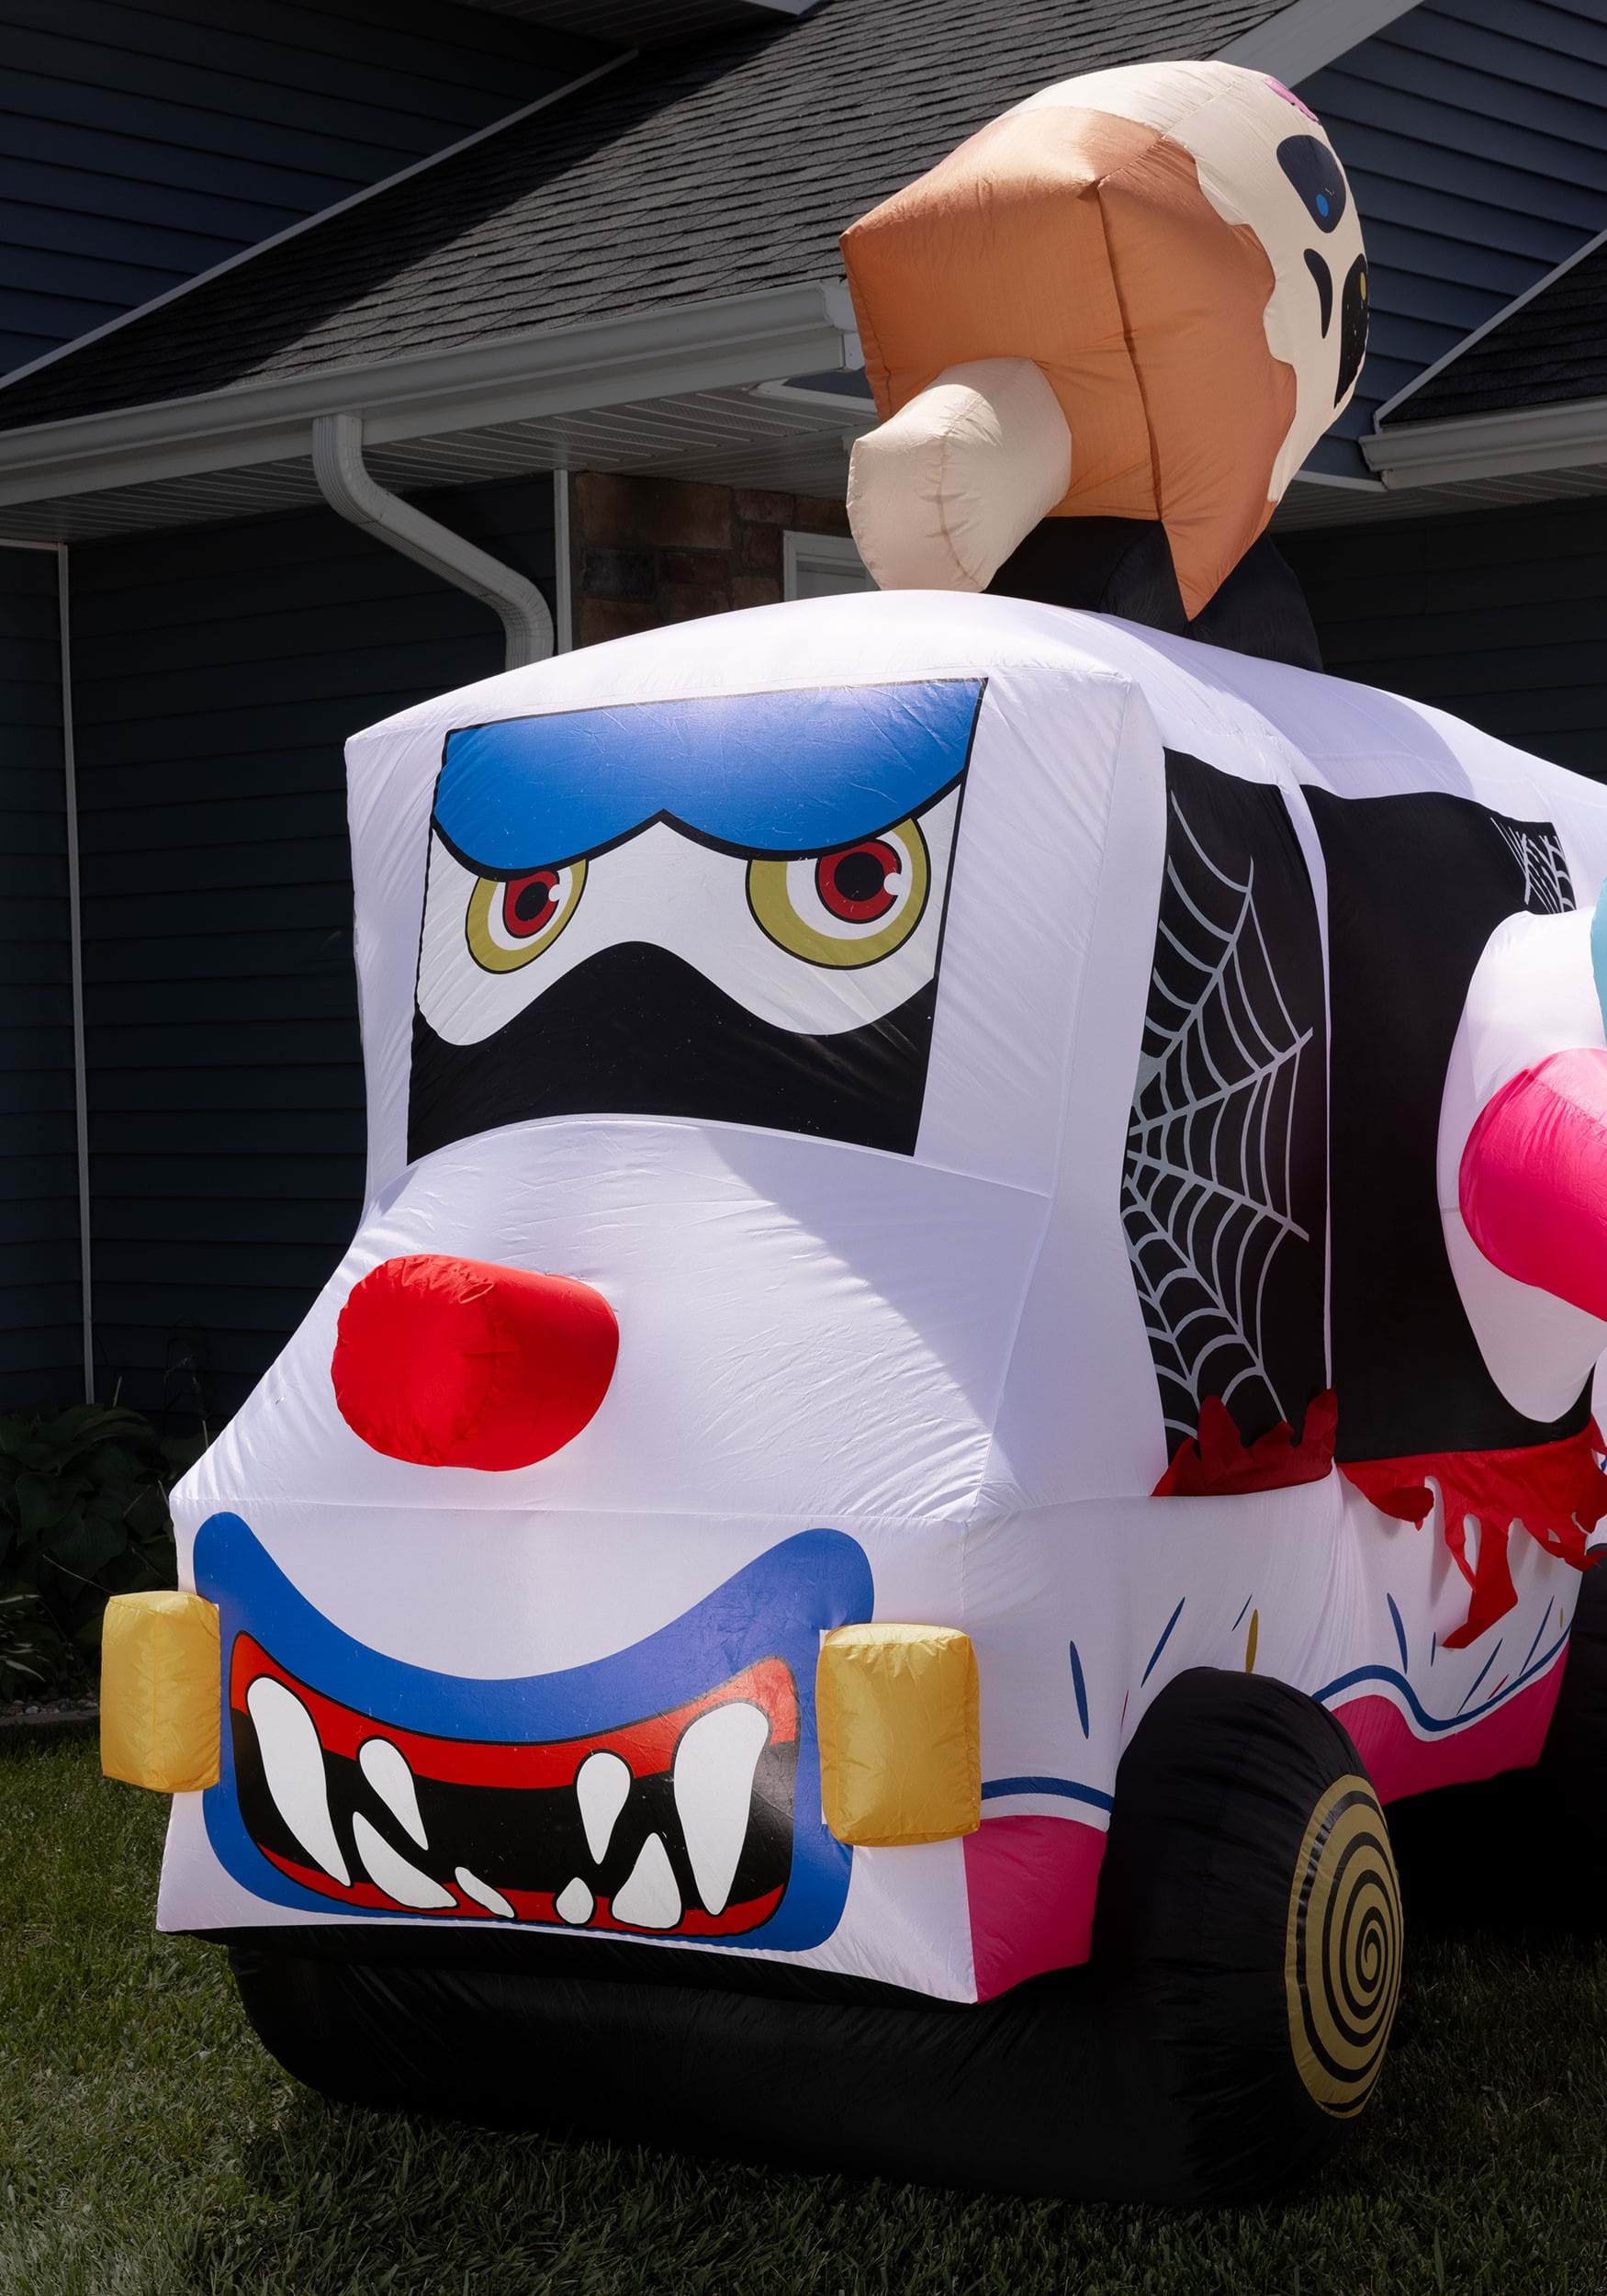 Sweet Shrieks Killer Clown Ice Cream Truck Inflatable Decoration